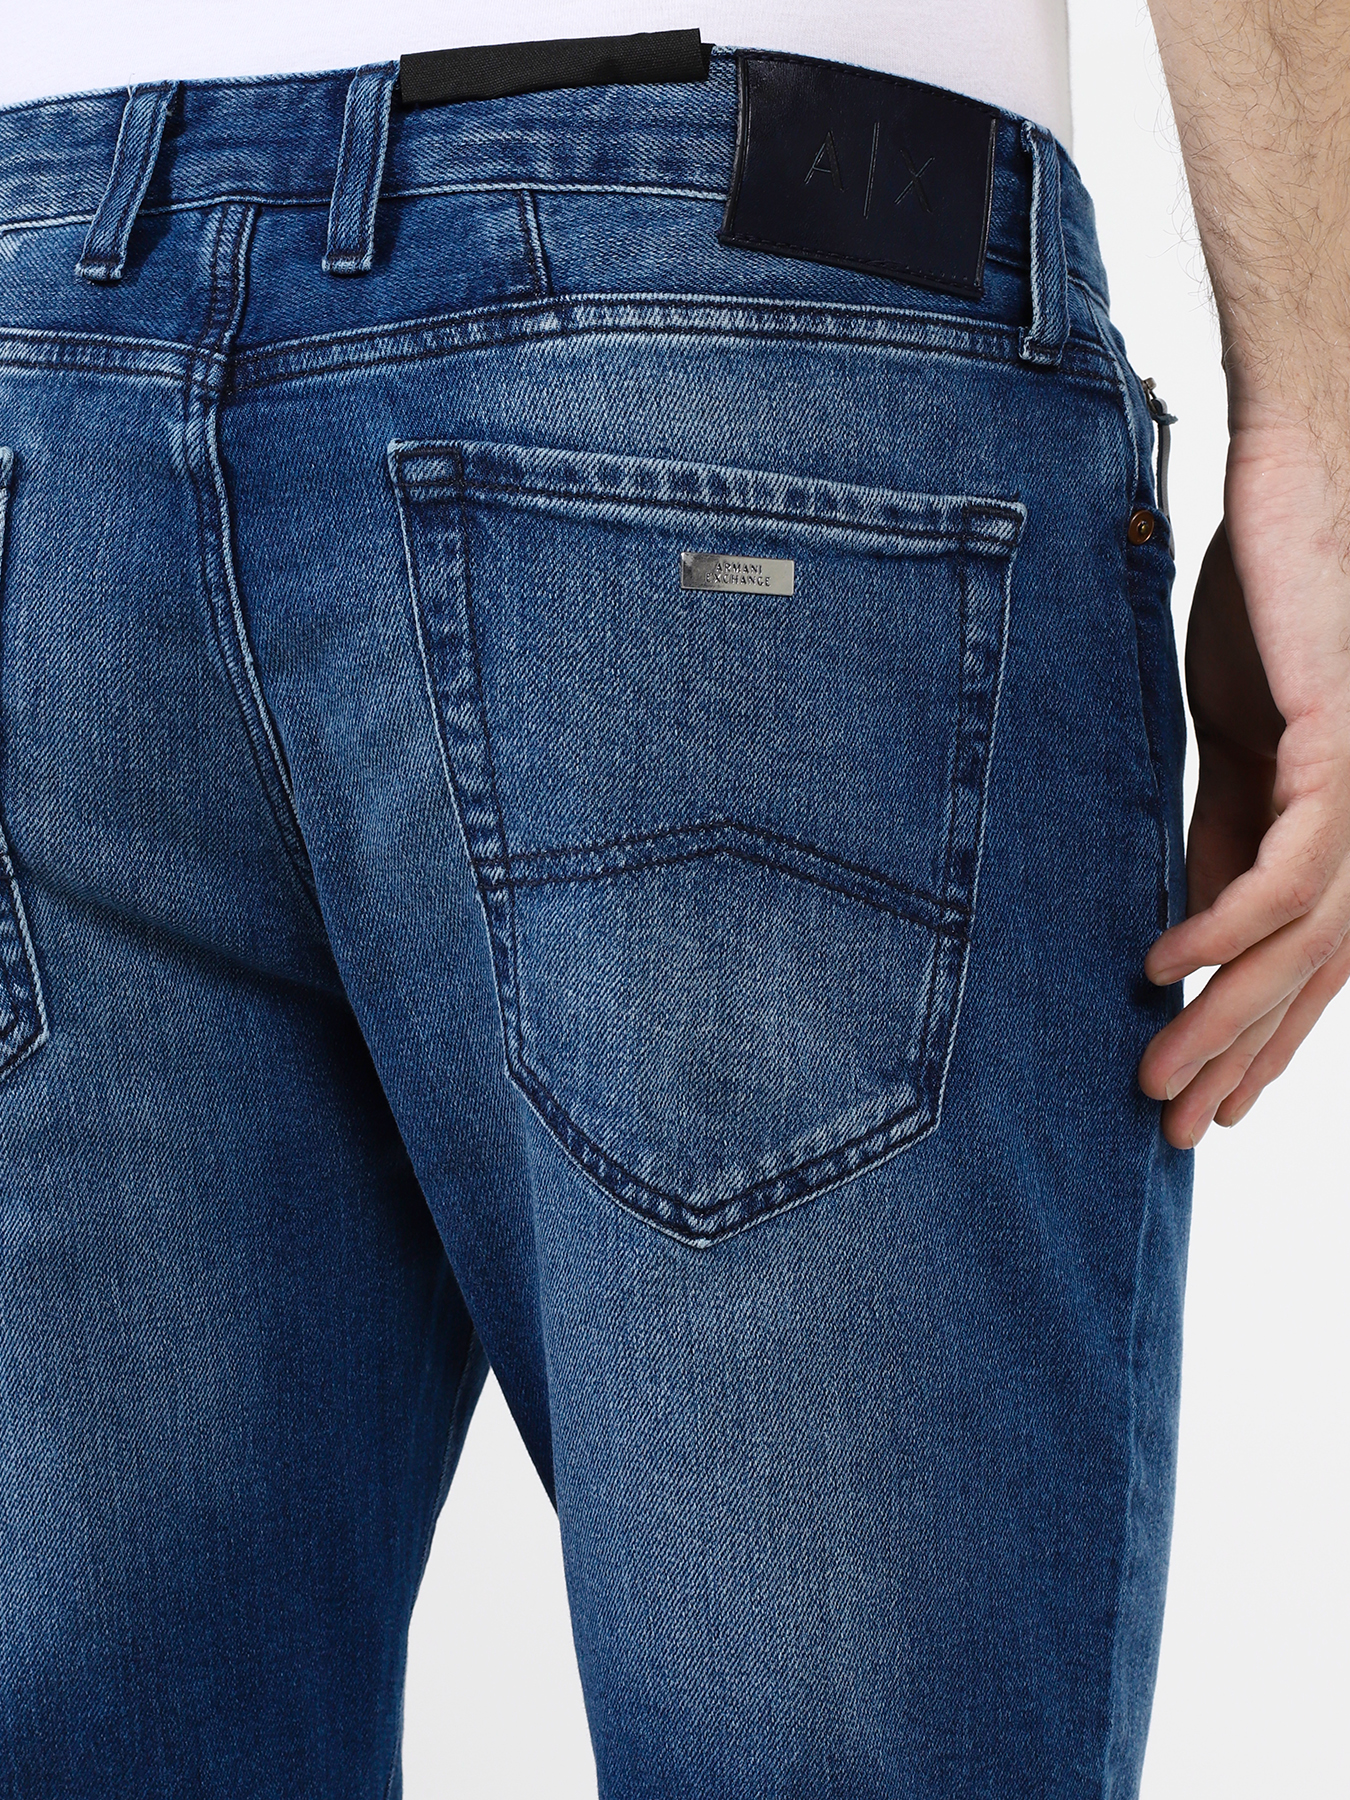 Armani Exchange Мужские джинсы J22 363995-015 Фото 4